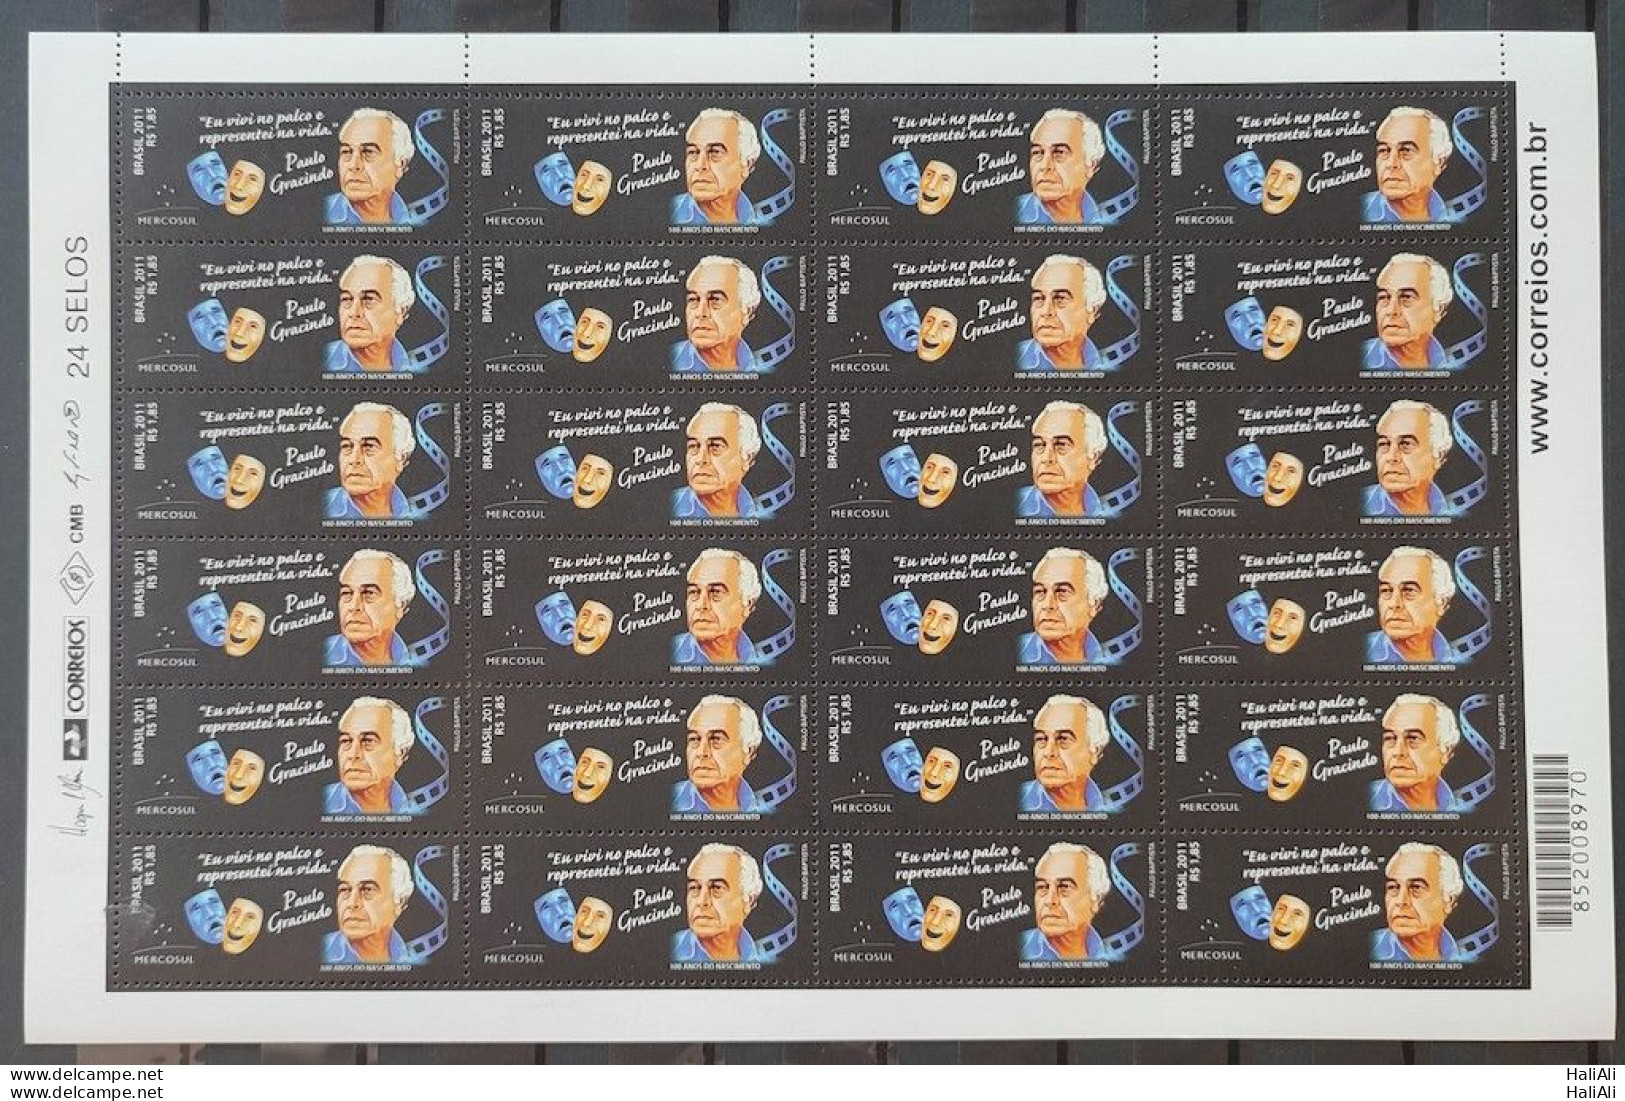 C 3100 Brazil Stamp Paulo Gracindo Actor Theater Cinema TV 2011 Sheet - Unused Stamps